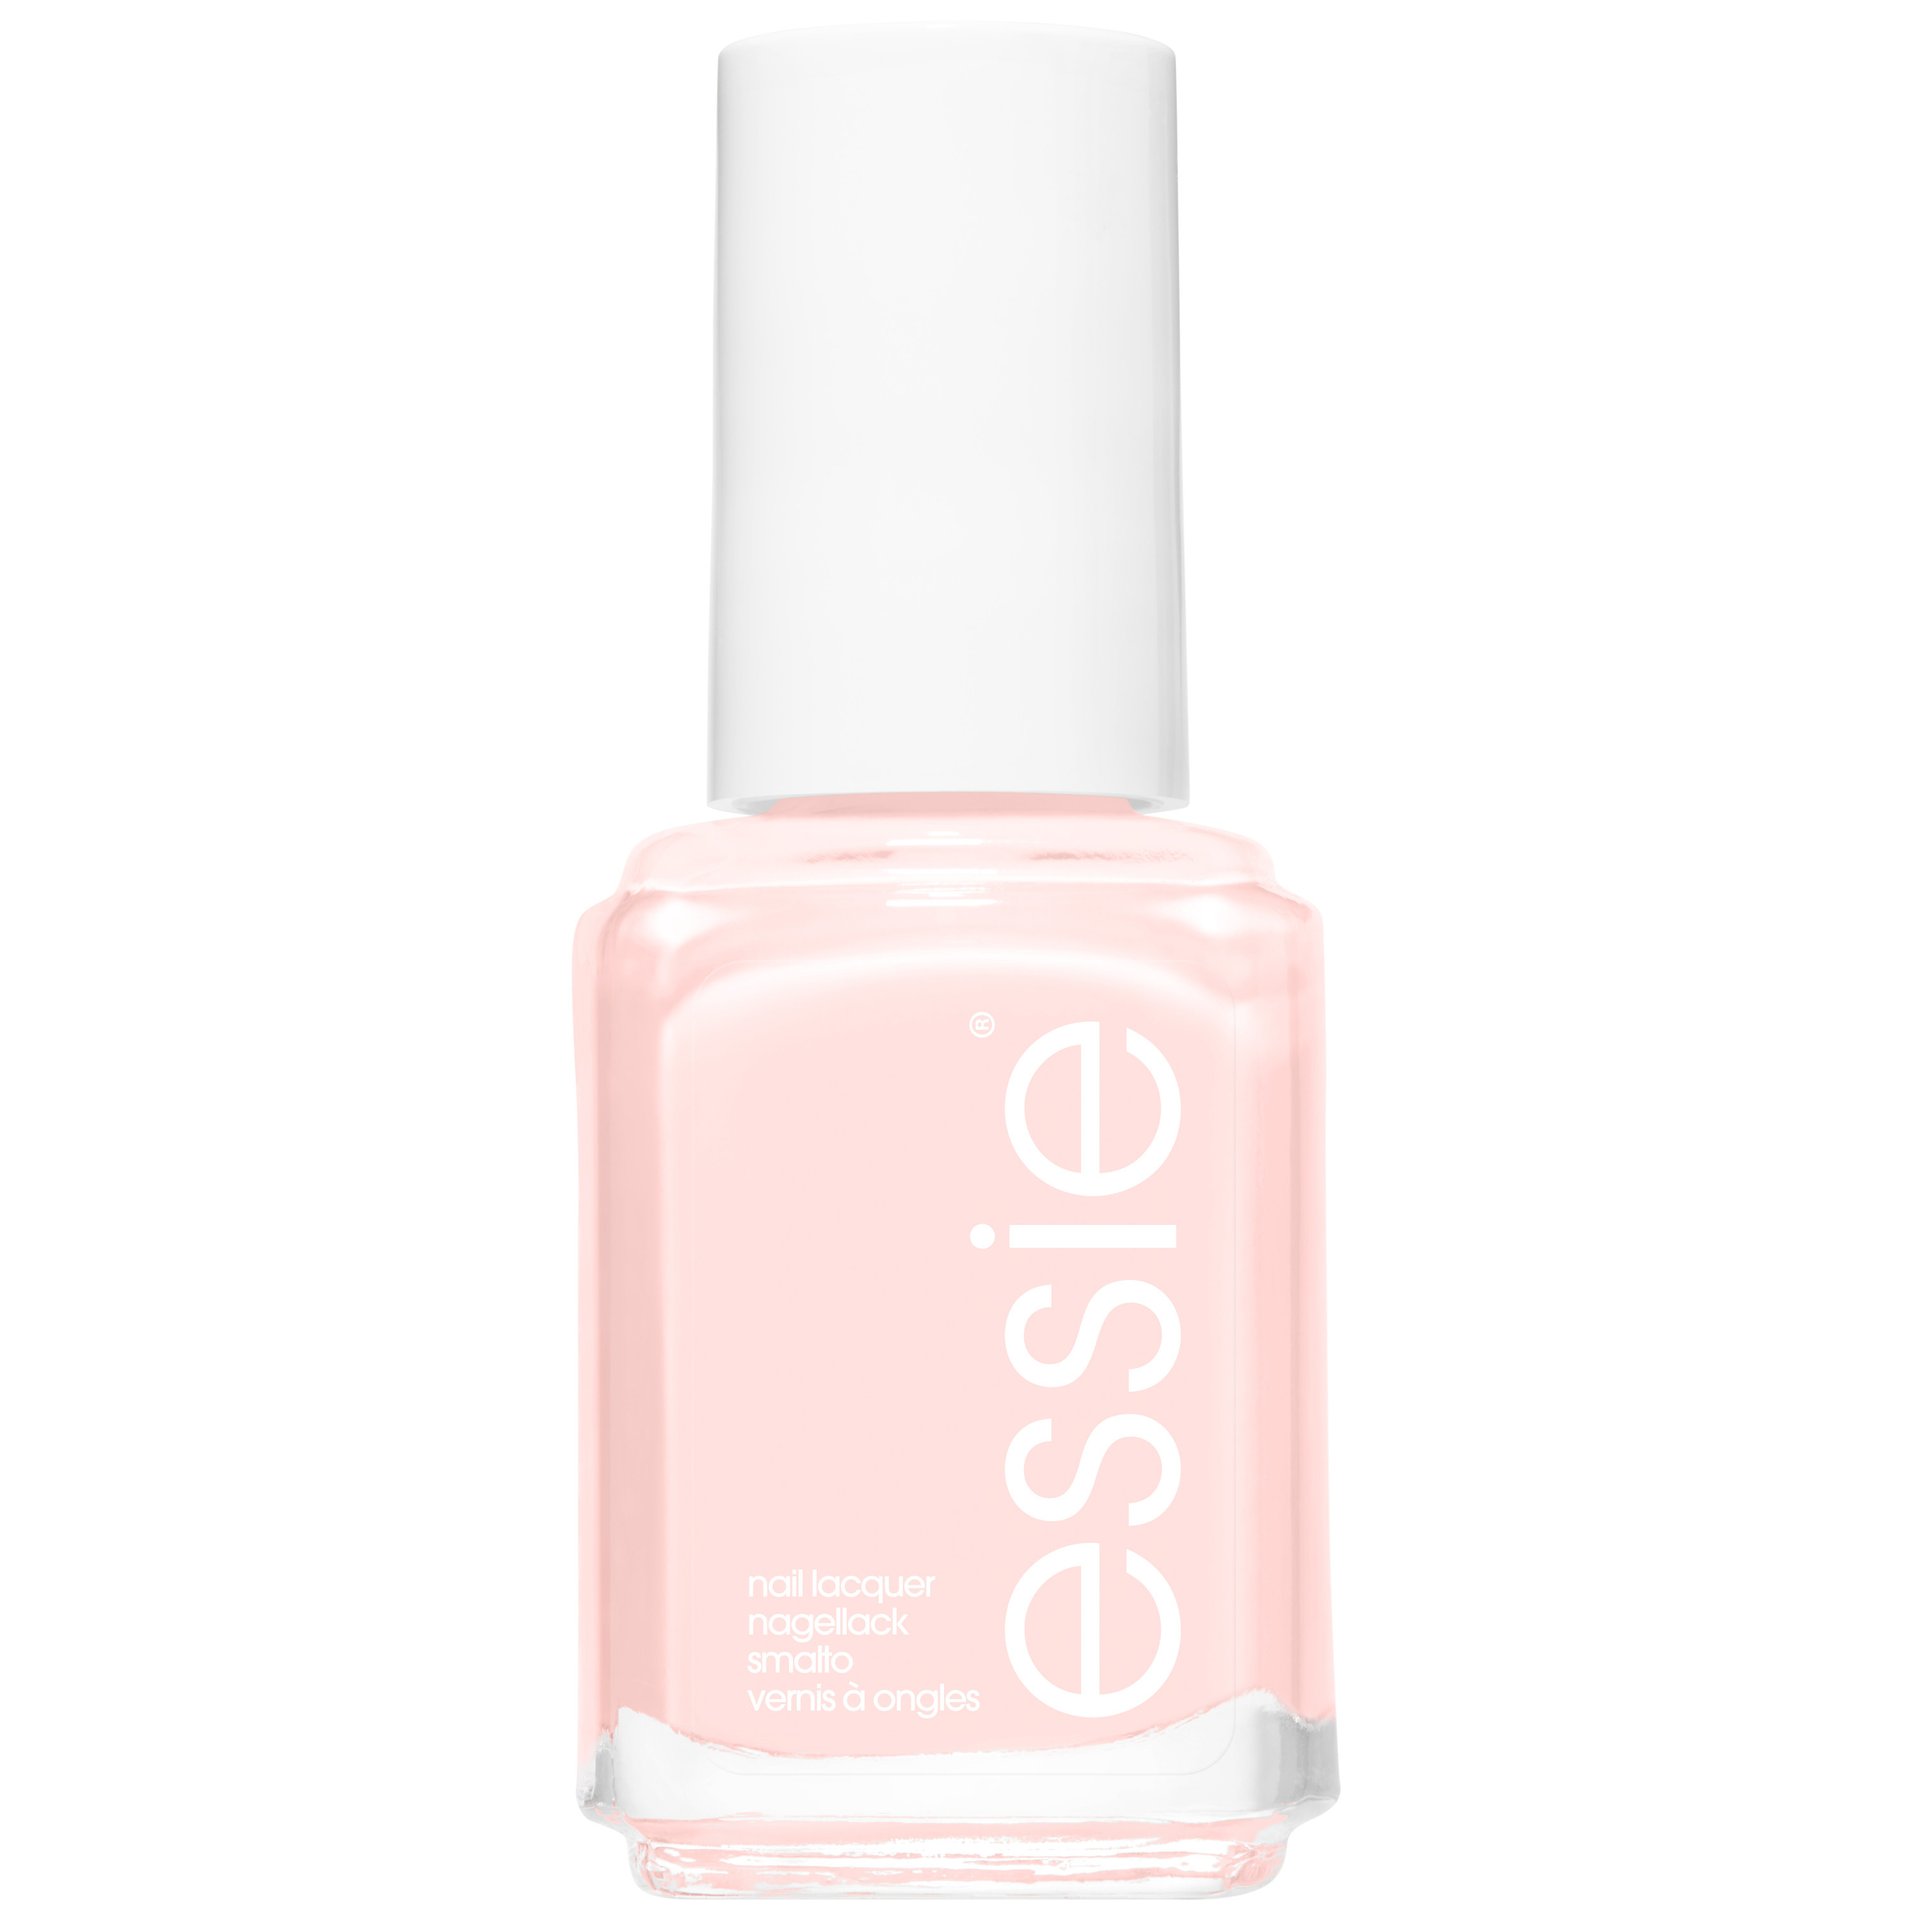 vanity fairest - sheer pastel pink shimmer nail polish & colour - essie